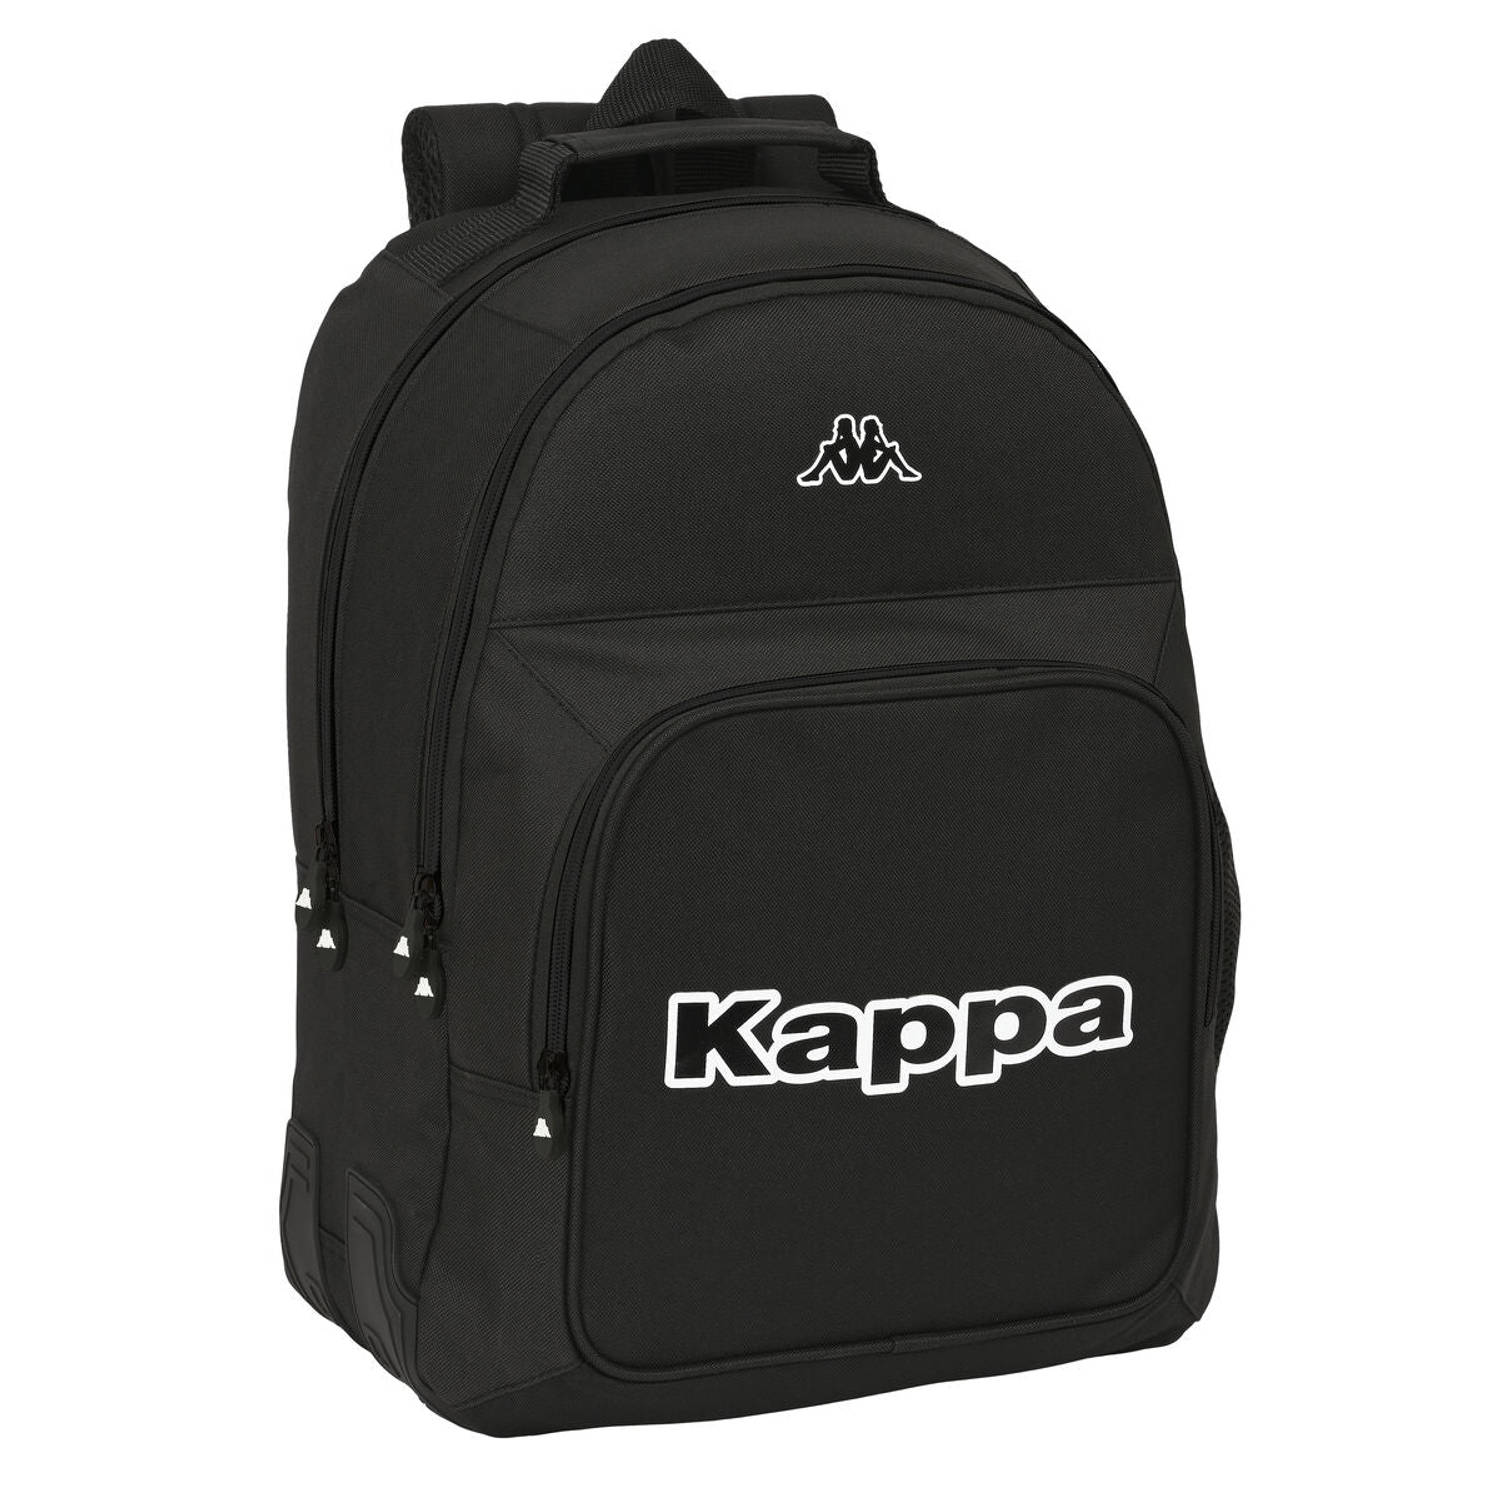 Kappa Schoolrugzak Black (32 X 42 X 15 Cm) - Zwart